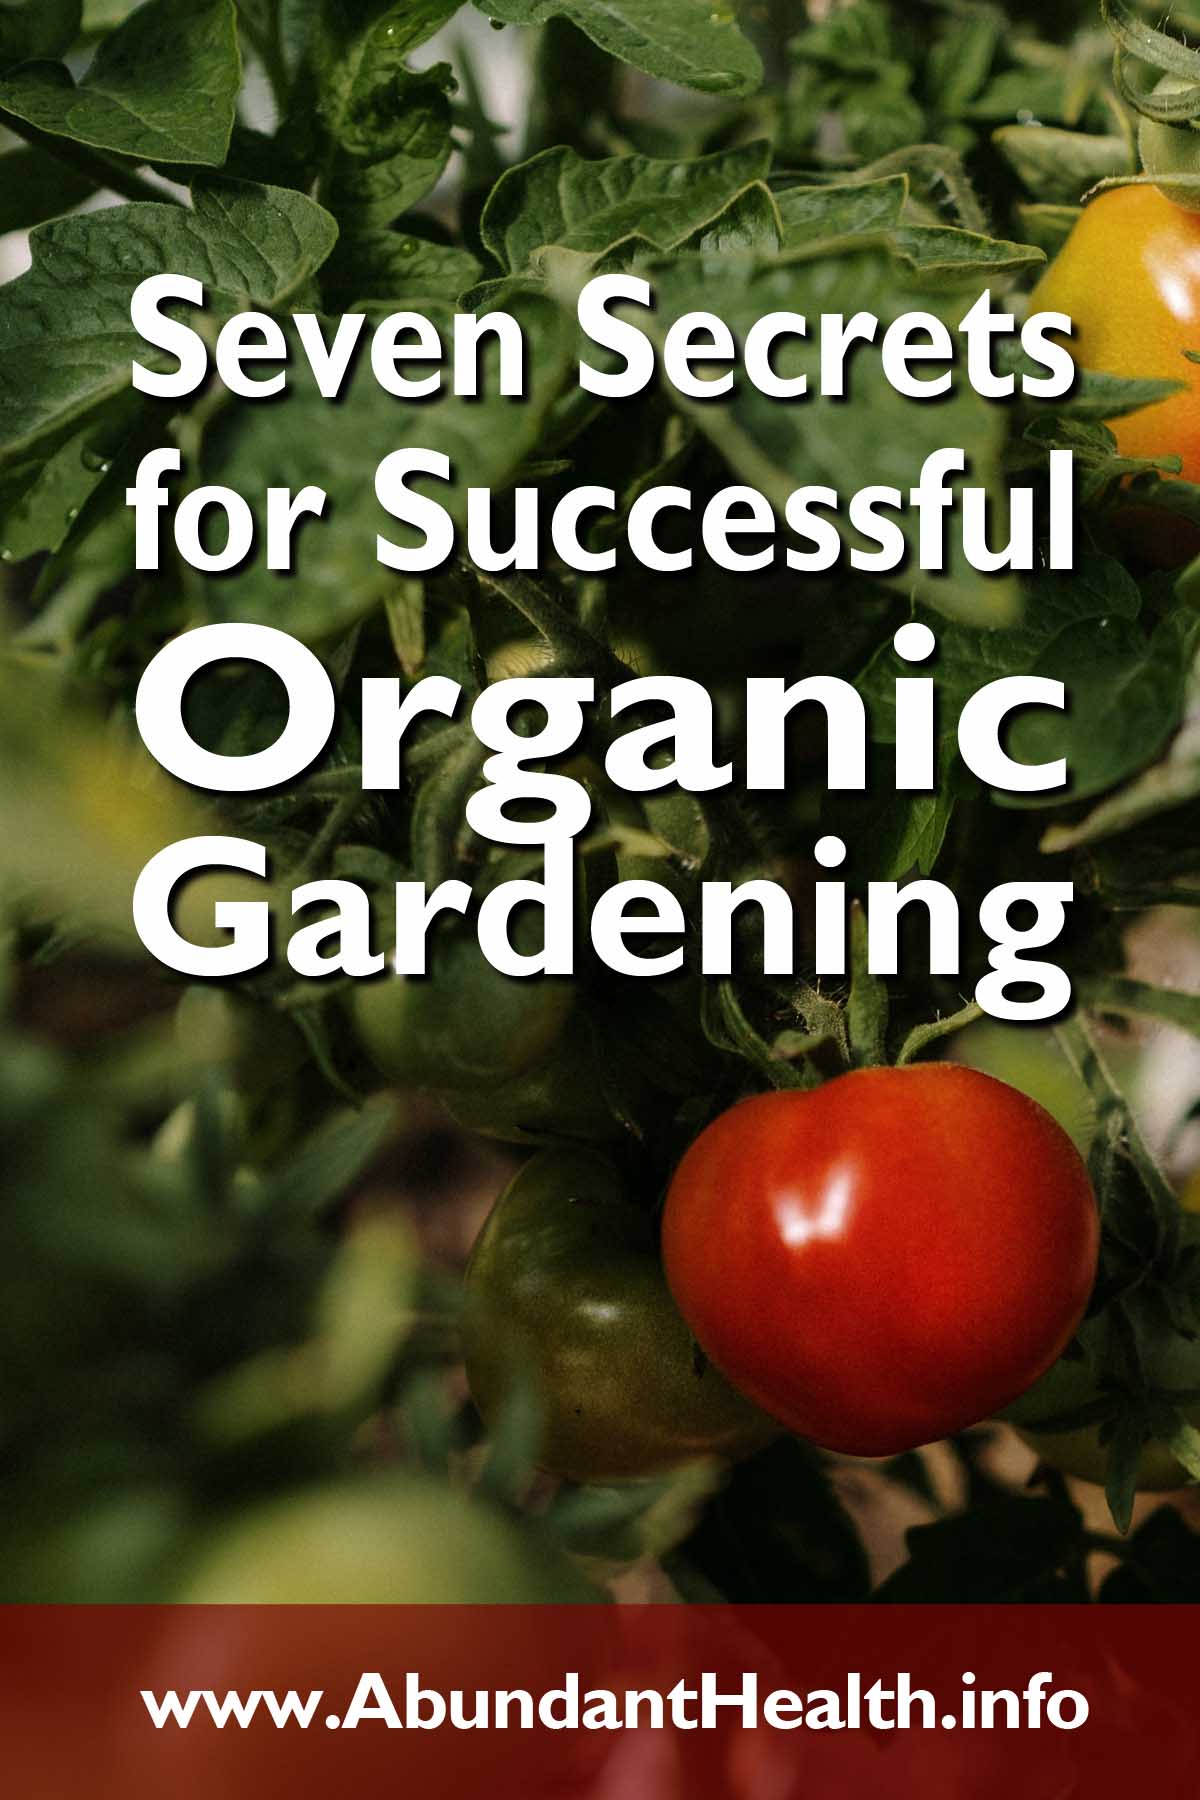 Seven Secrets for Successful Organic Gardening